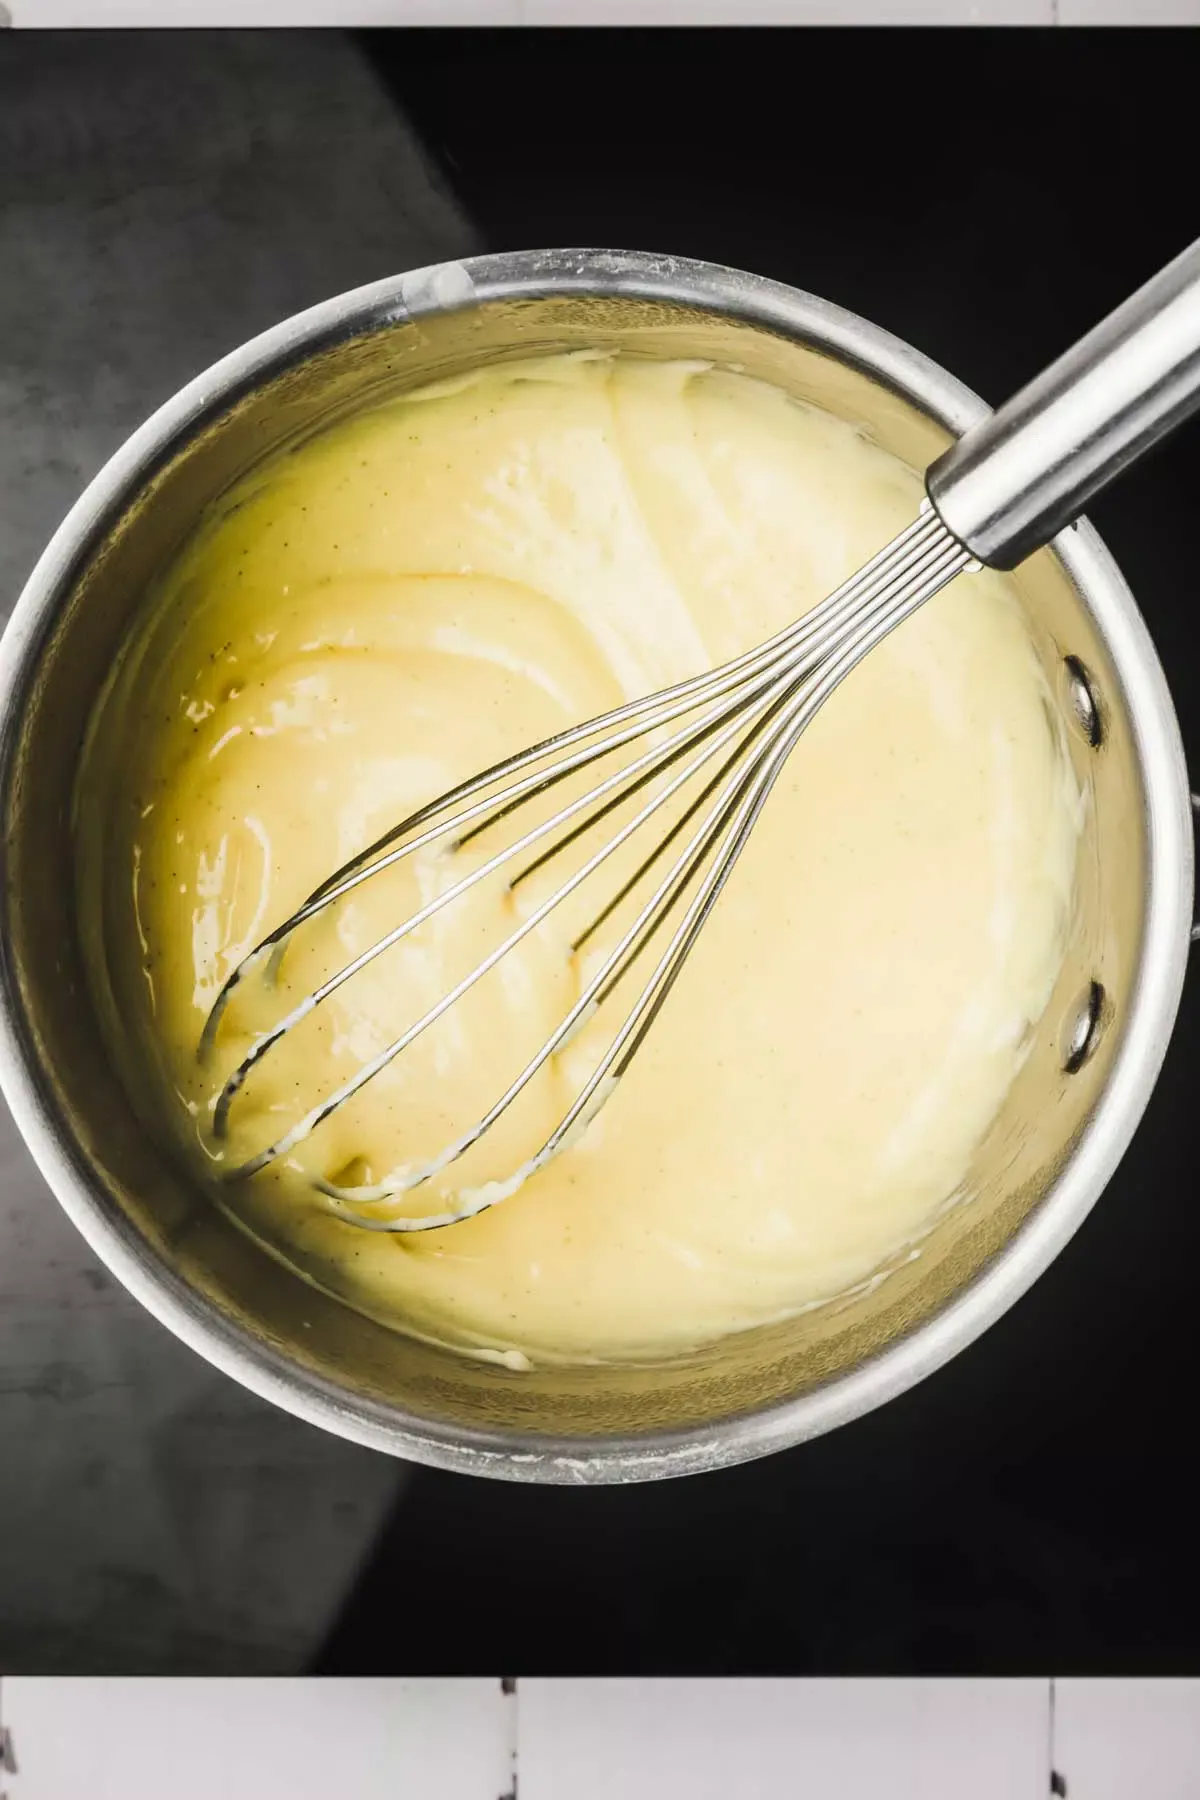 Pastry cream in a saucepan